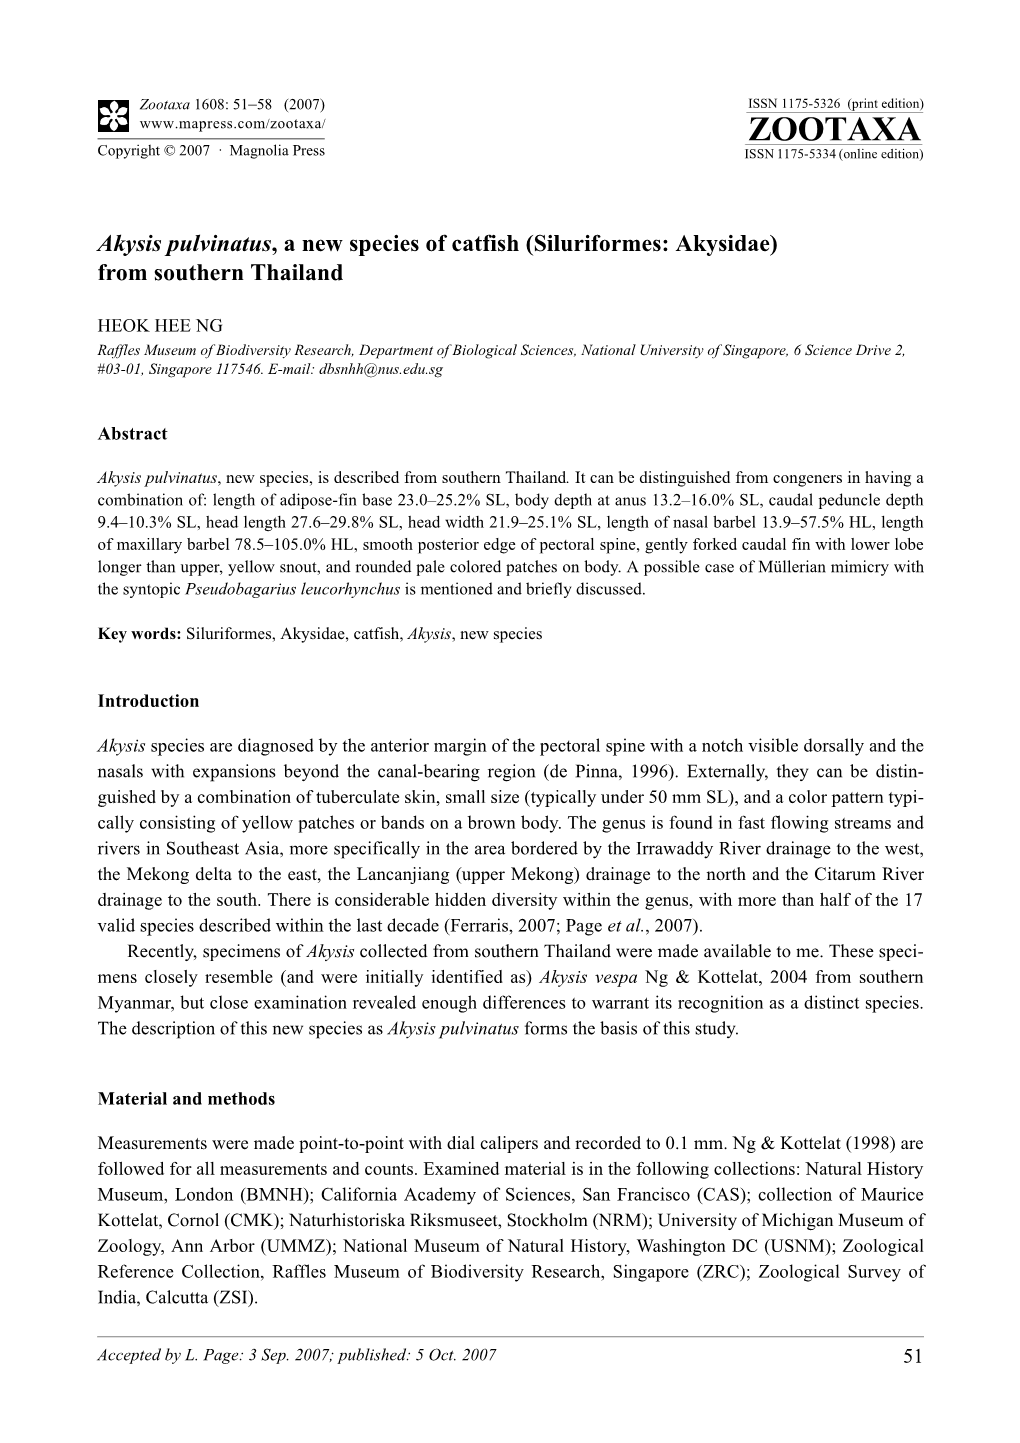 Zootaxa,Akysis Pulvinatus, a New Species of Catfish (Siluriformes: Akysidae)